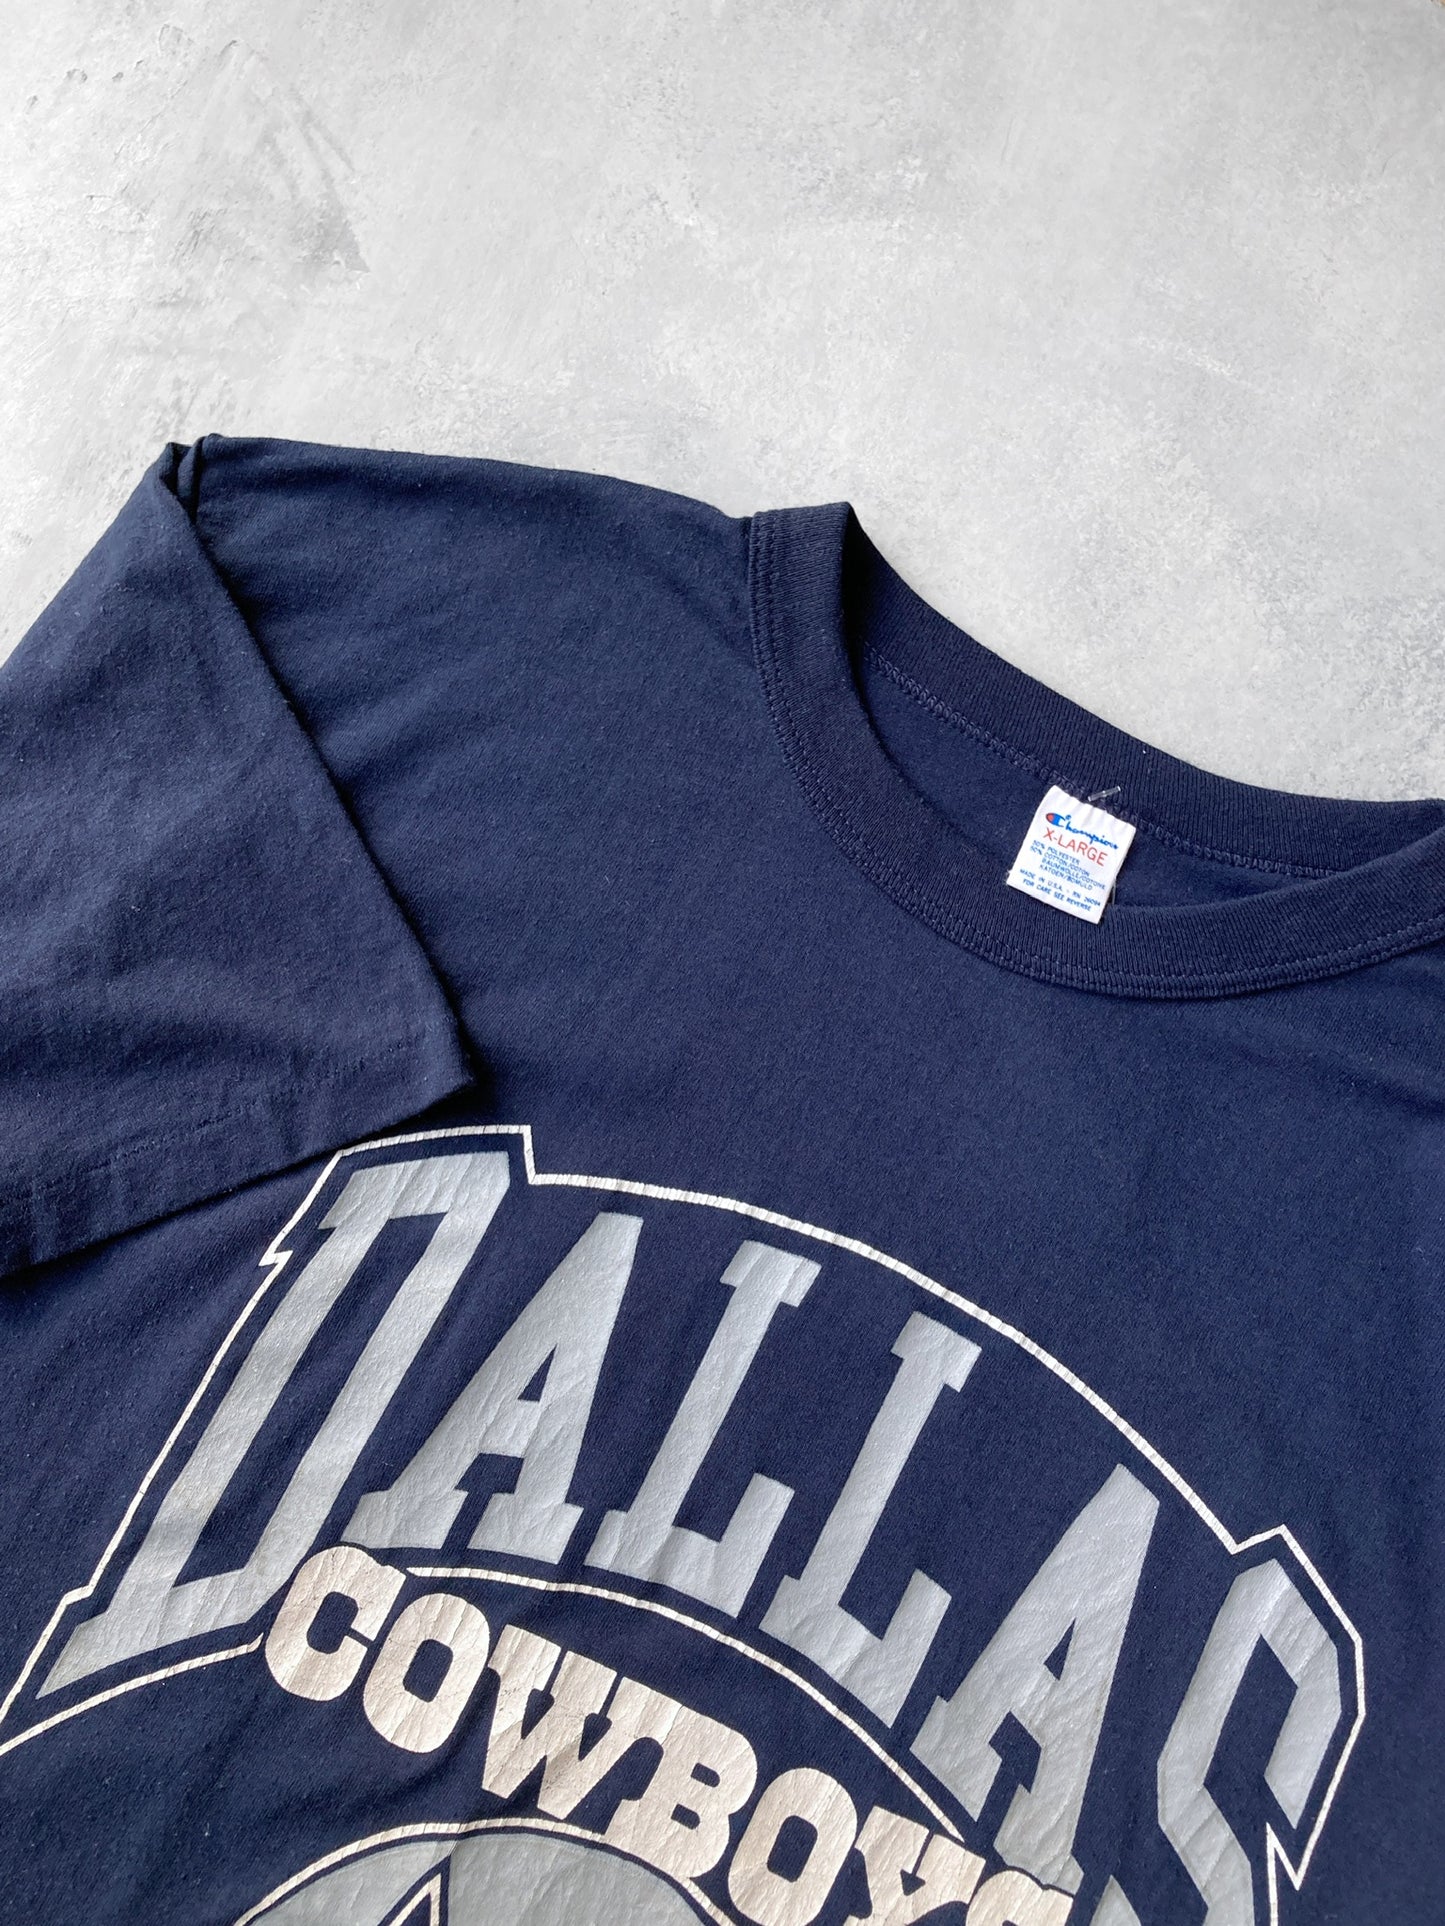 Dallas Cowboys T-Shirt 90's - XL